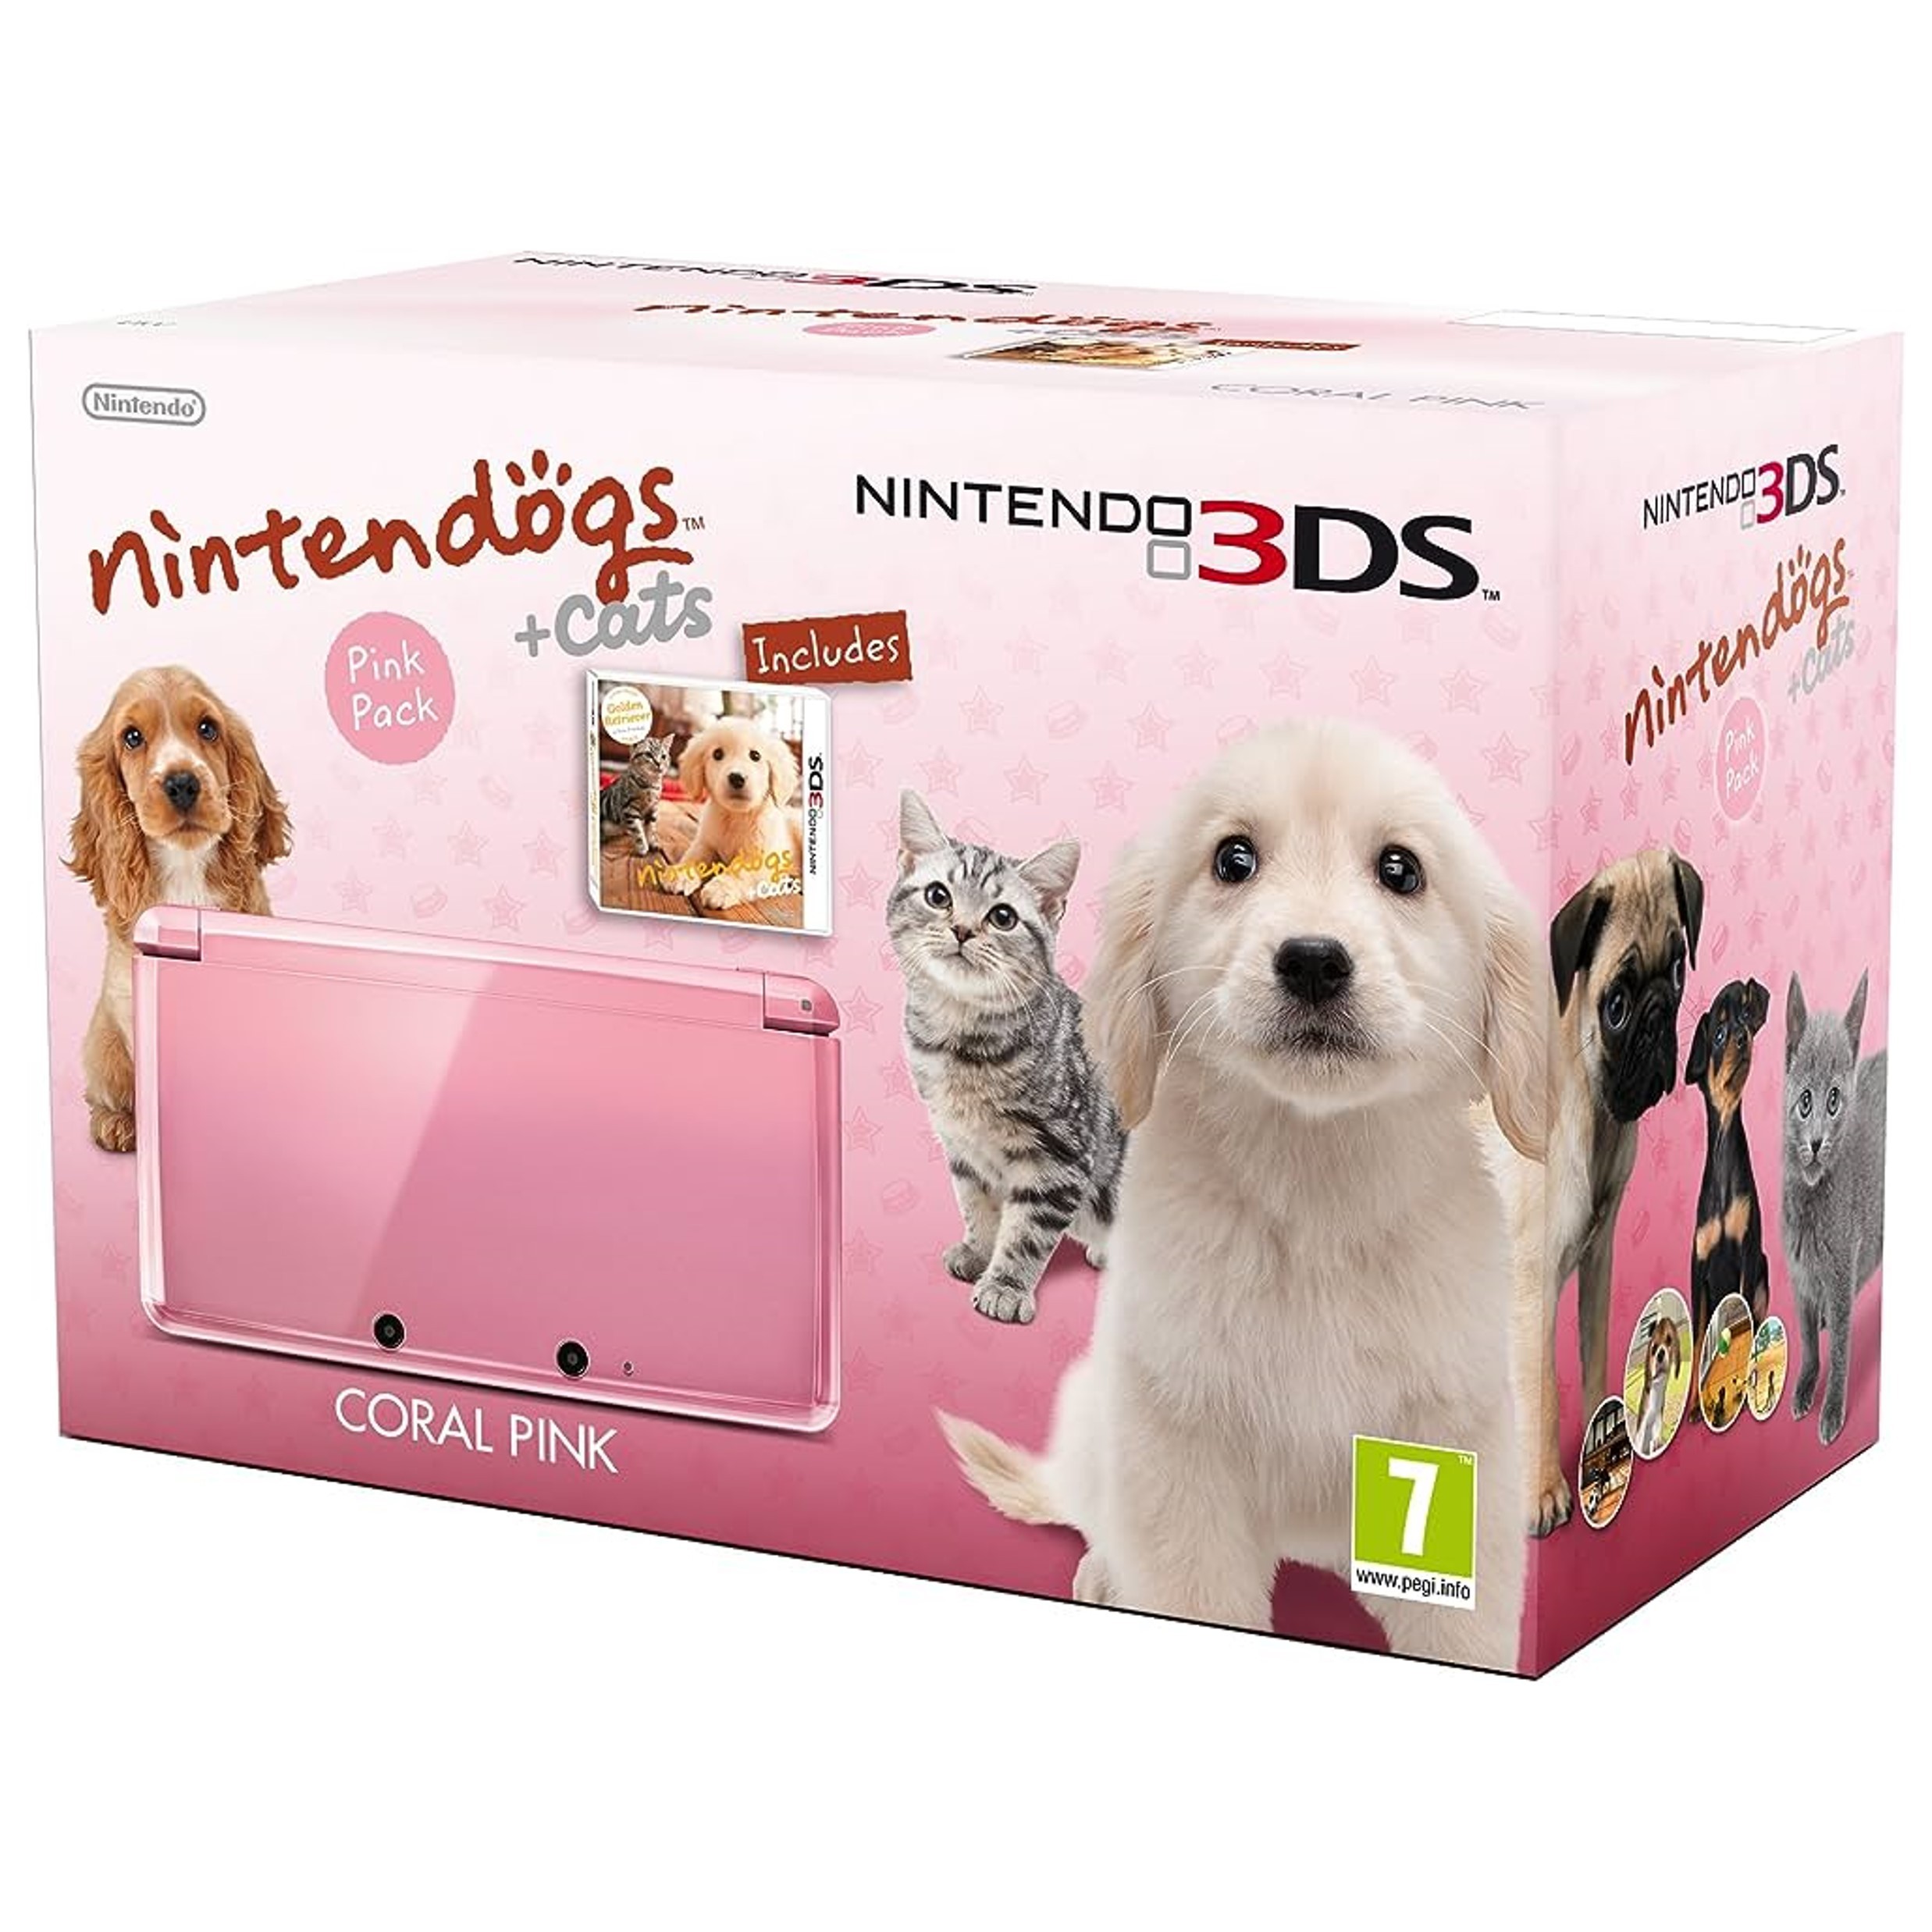 Nintendo 3DS - Coral Pink - Nintendögs + Cats Edition [Complete] - Nintendo 3DS Hardware